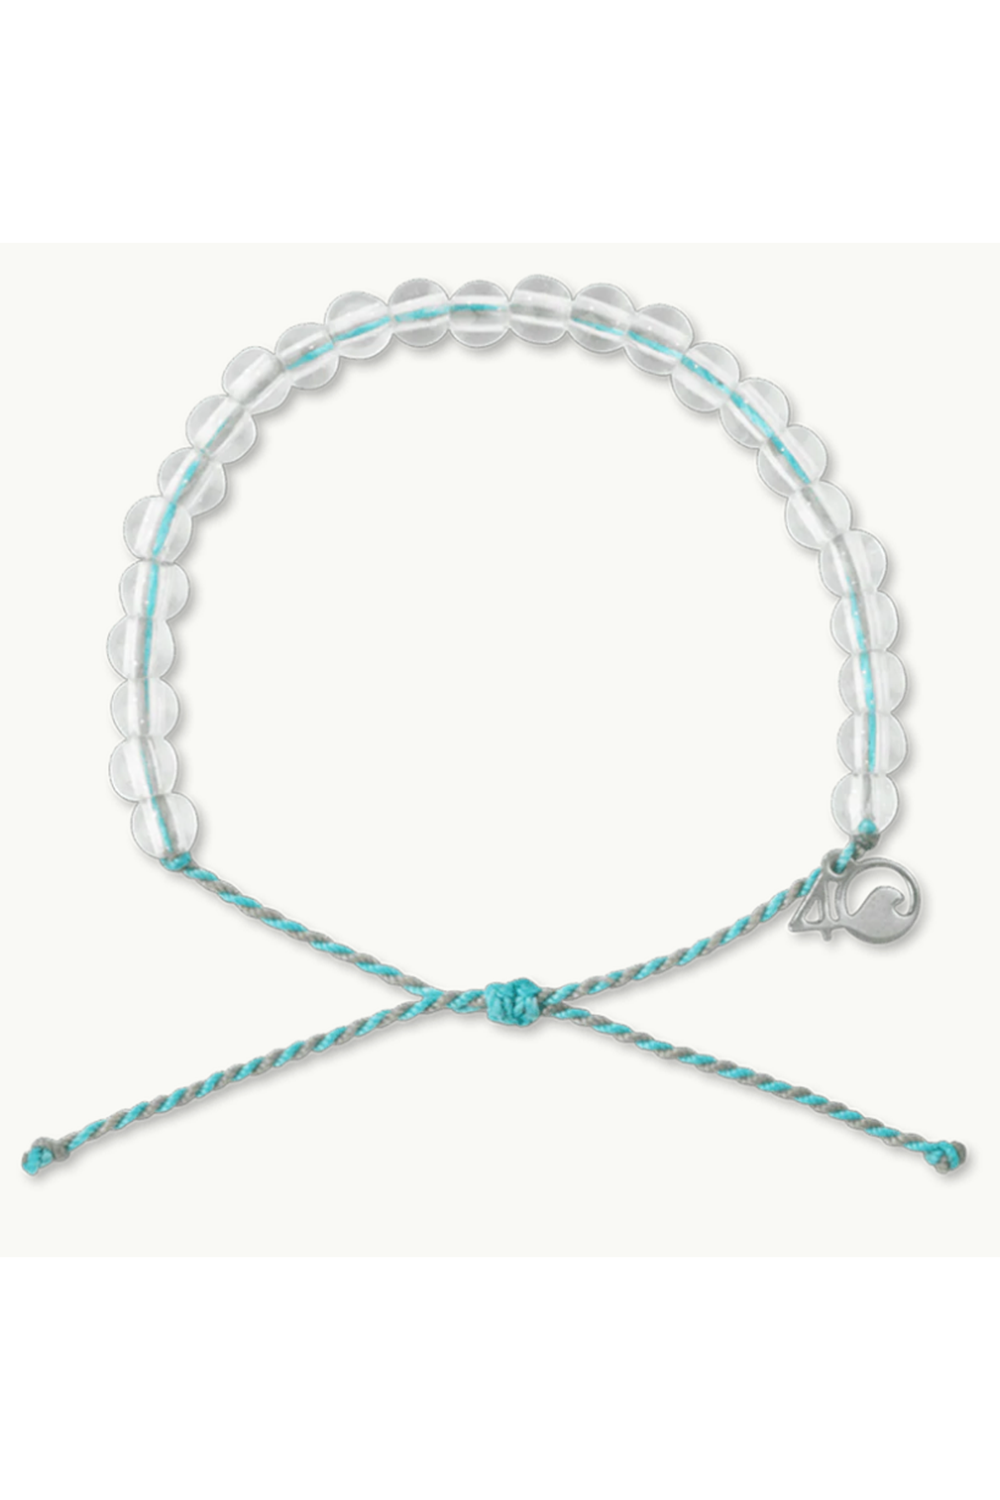 4Ocean — Manatee Beaded Bracelet | ALL ECO